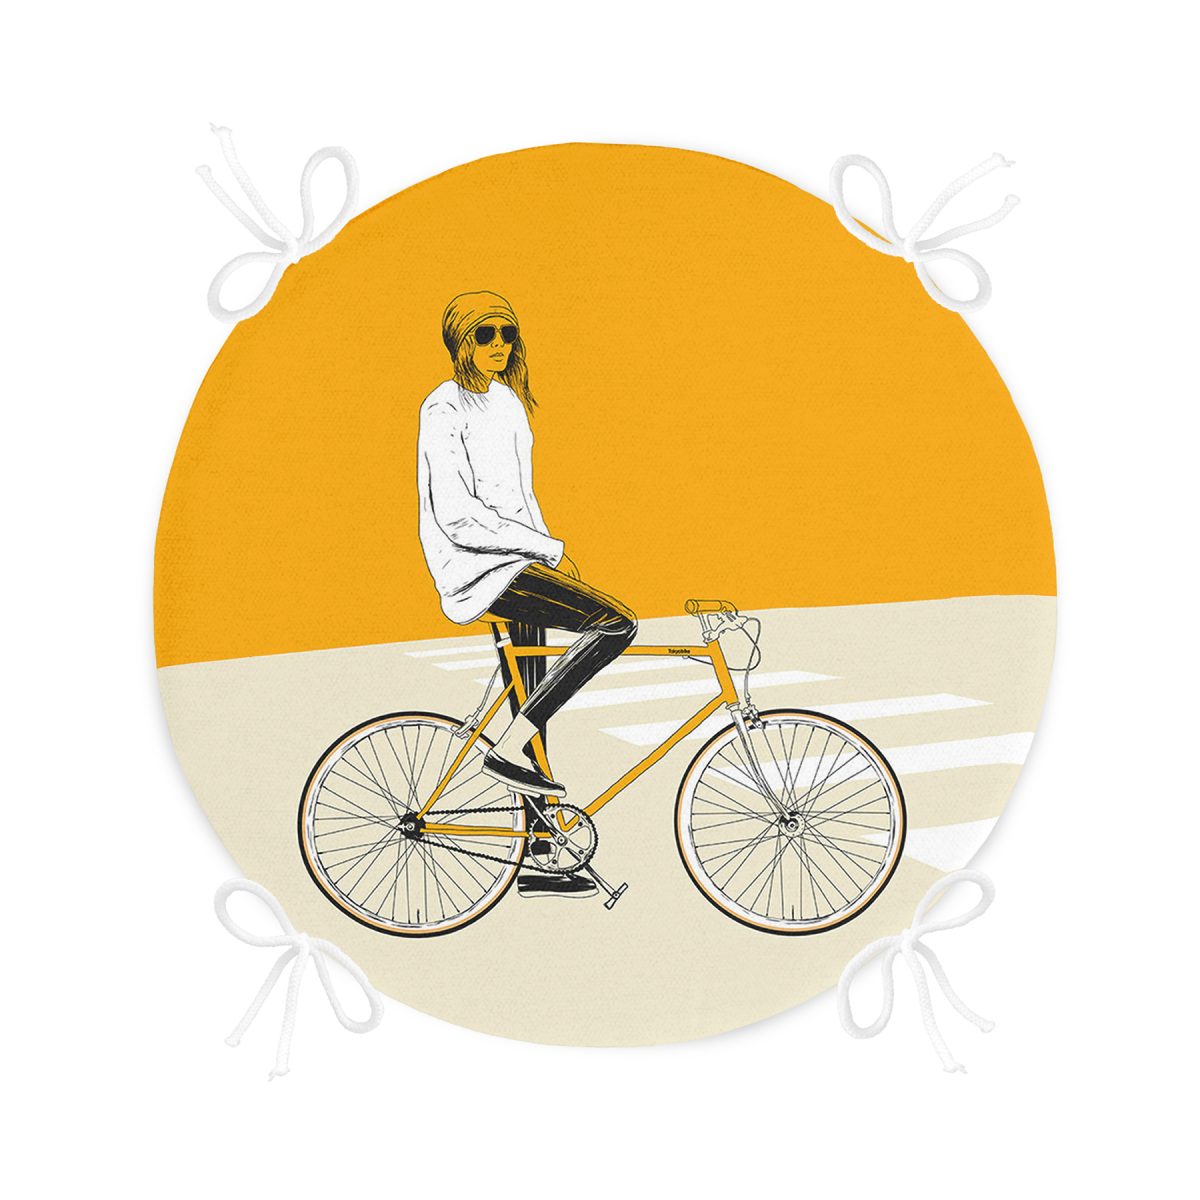 Sarı Krem Zemin Bisikletli Adam Motifli Yuvarlak Fermuarlı Sandalye Minderi Realhomes